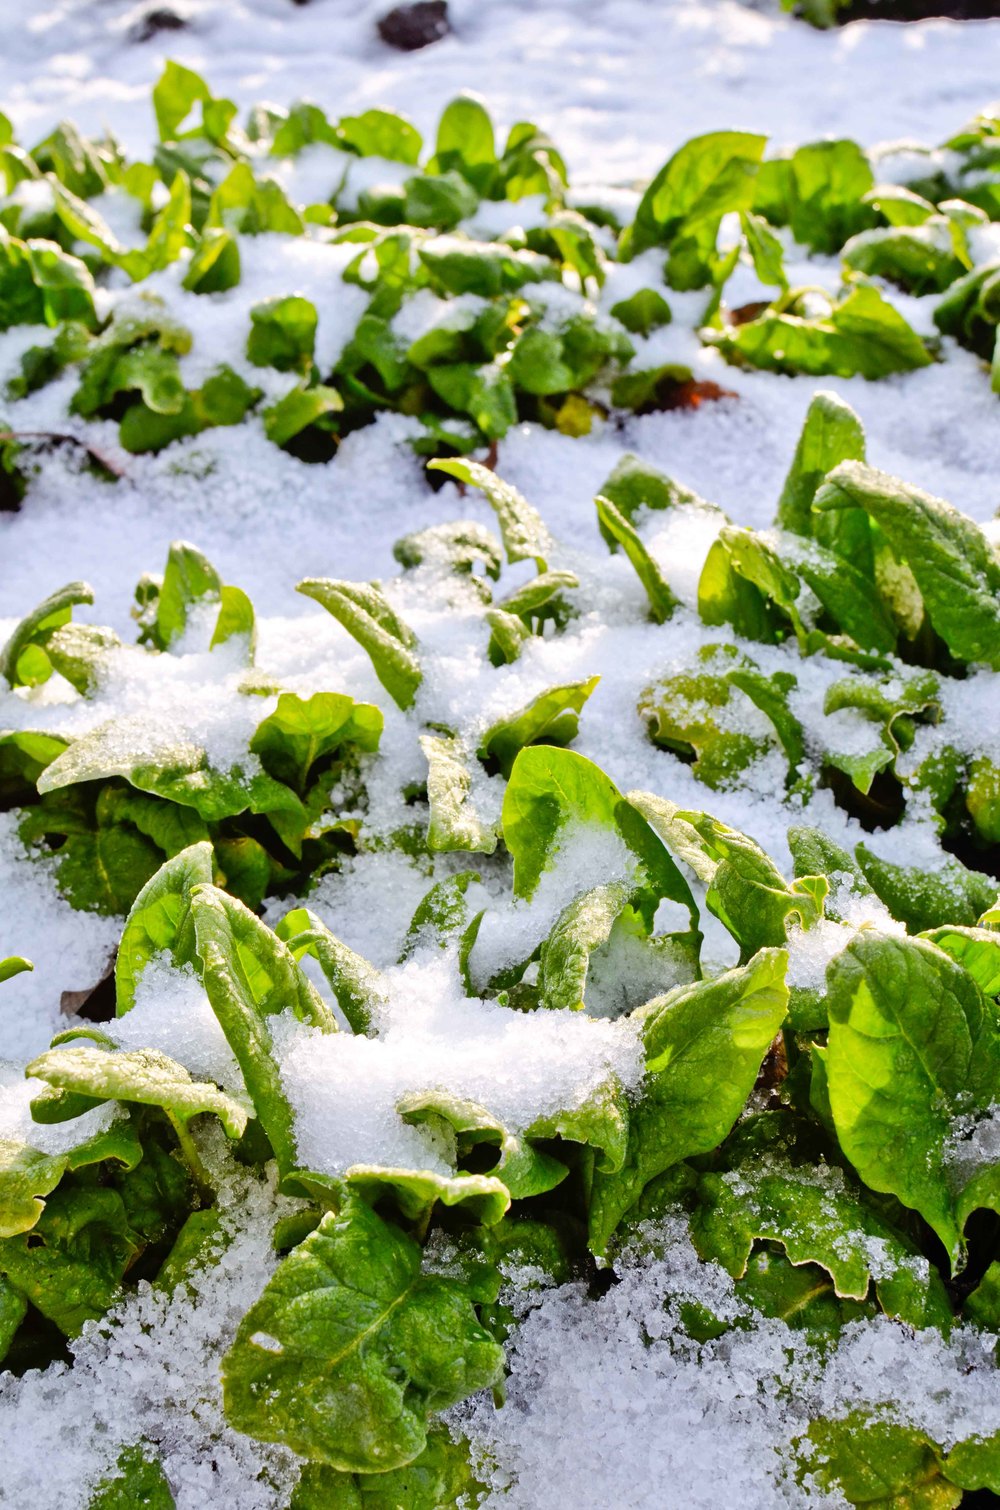 Overwintering: พืชที่สามารถทนต่อความหนาวเย็นและวิธีช่วยให้พืชเจริญเติบโต — Seattle Urban Farm Company